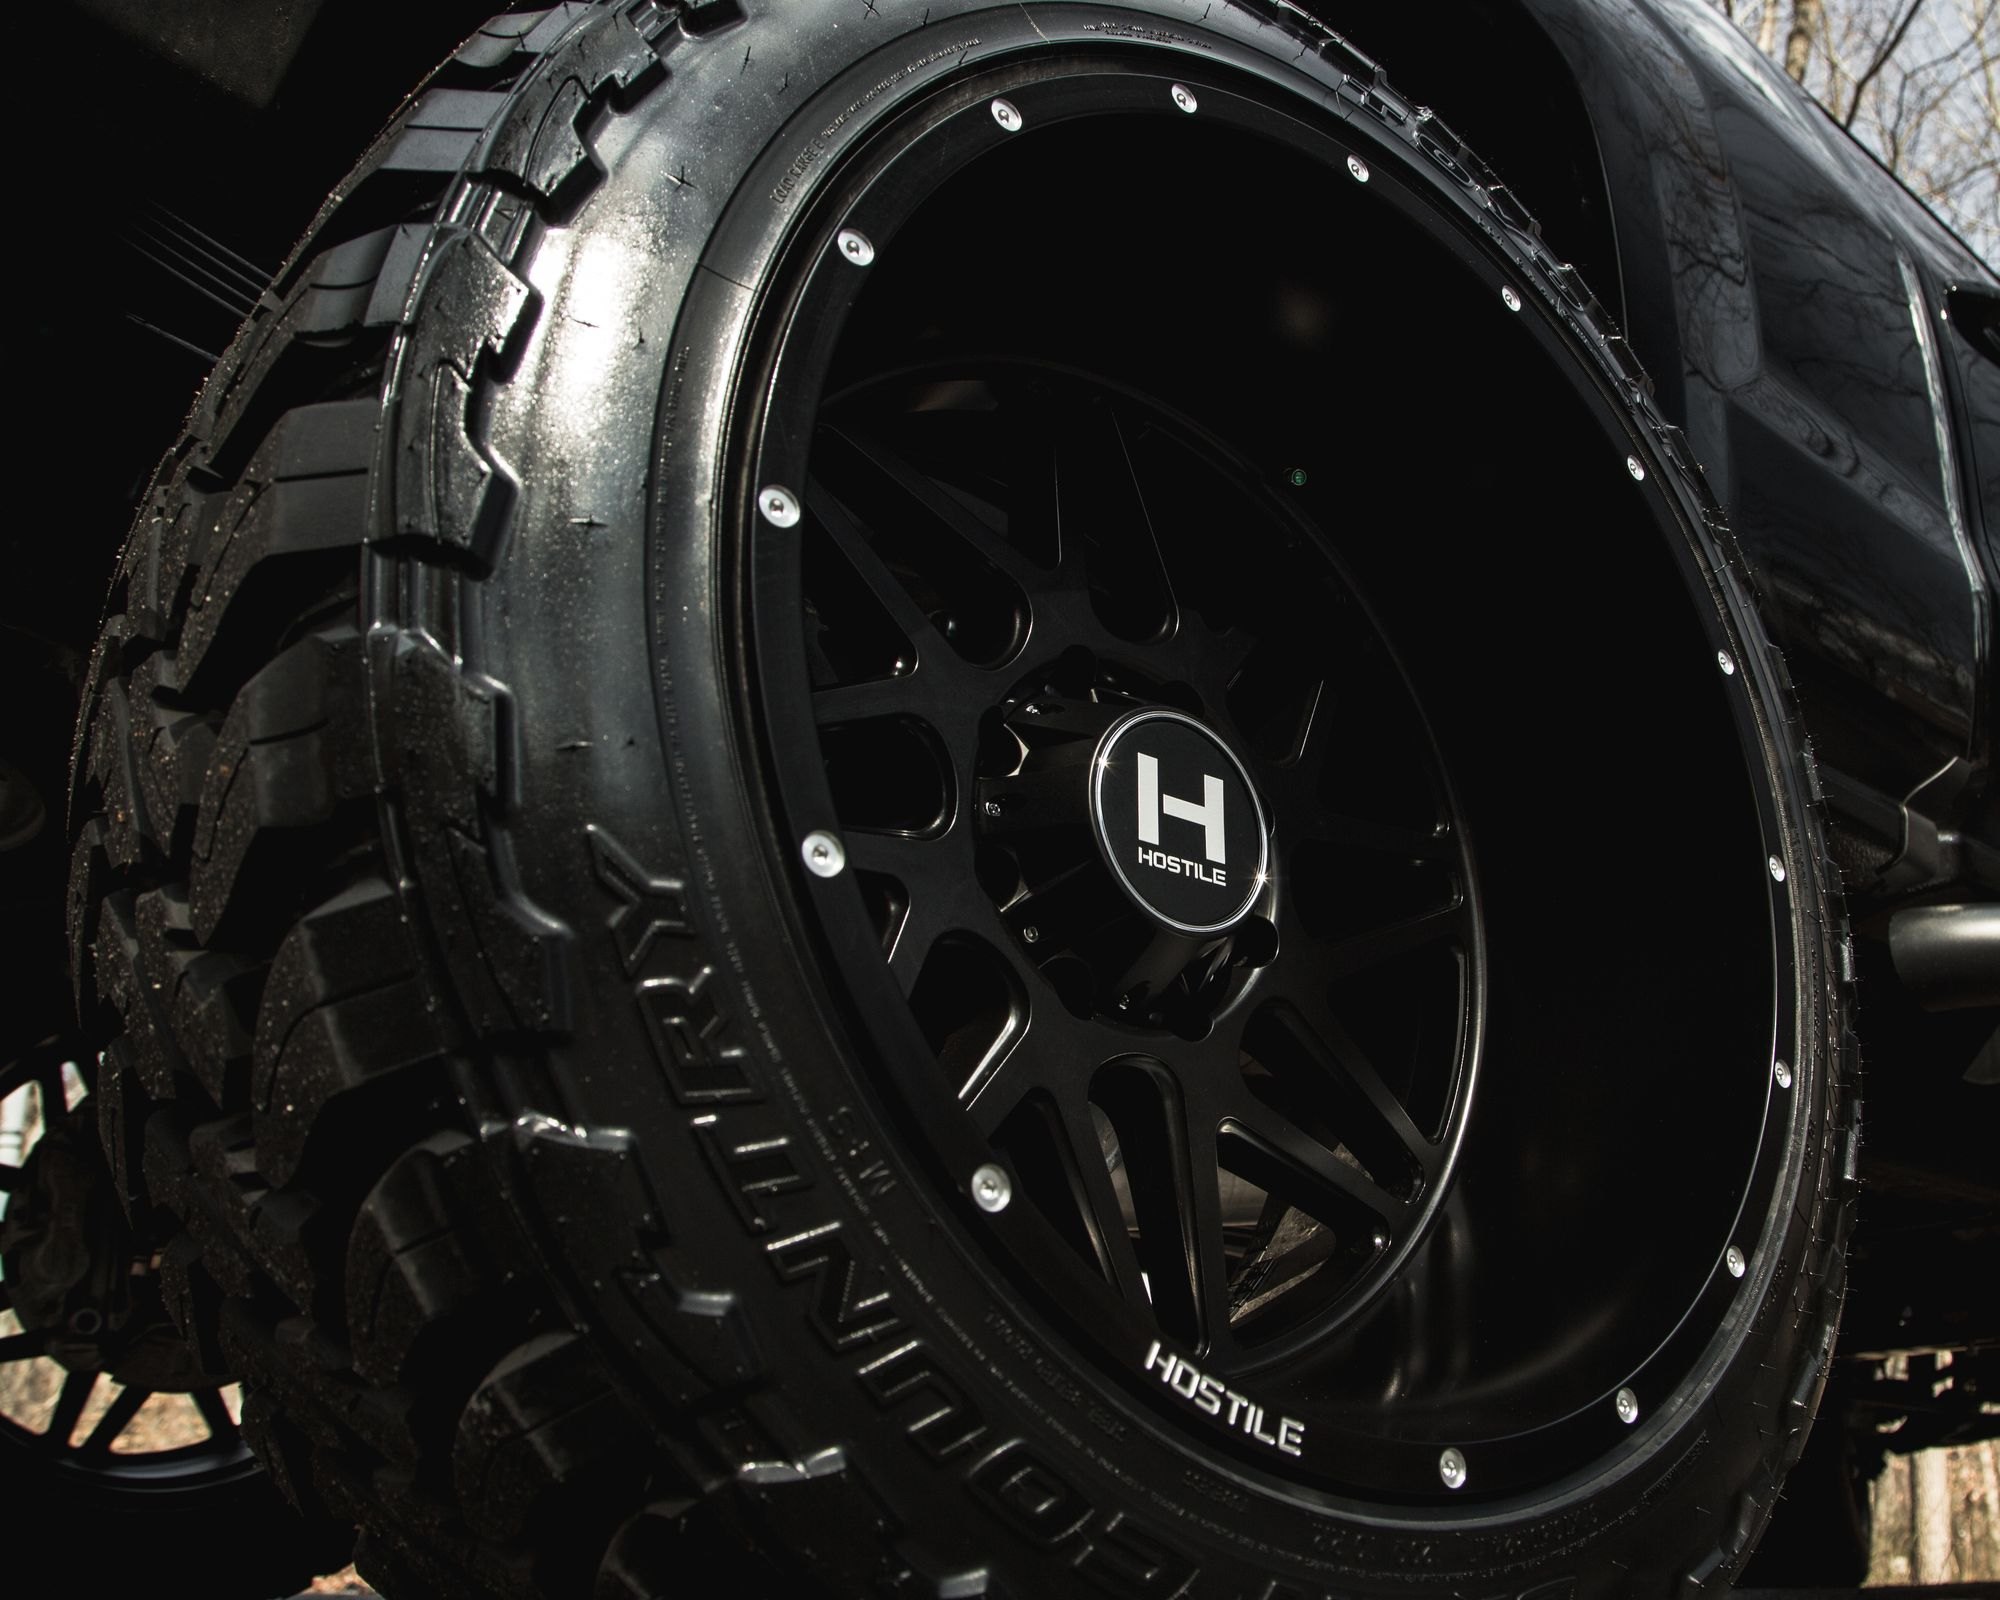 Black Lifted Chevy Silverado with Custom Hostile Wheels - Photo by CARiD